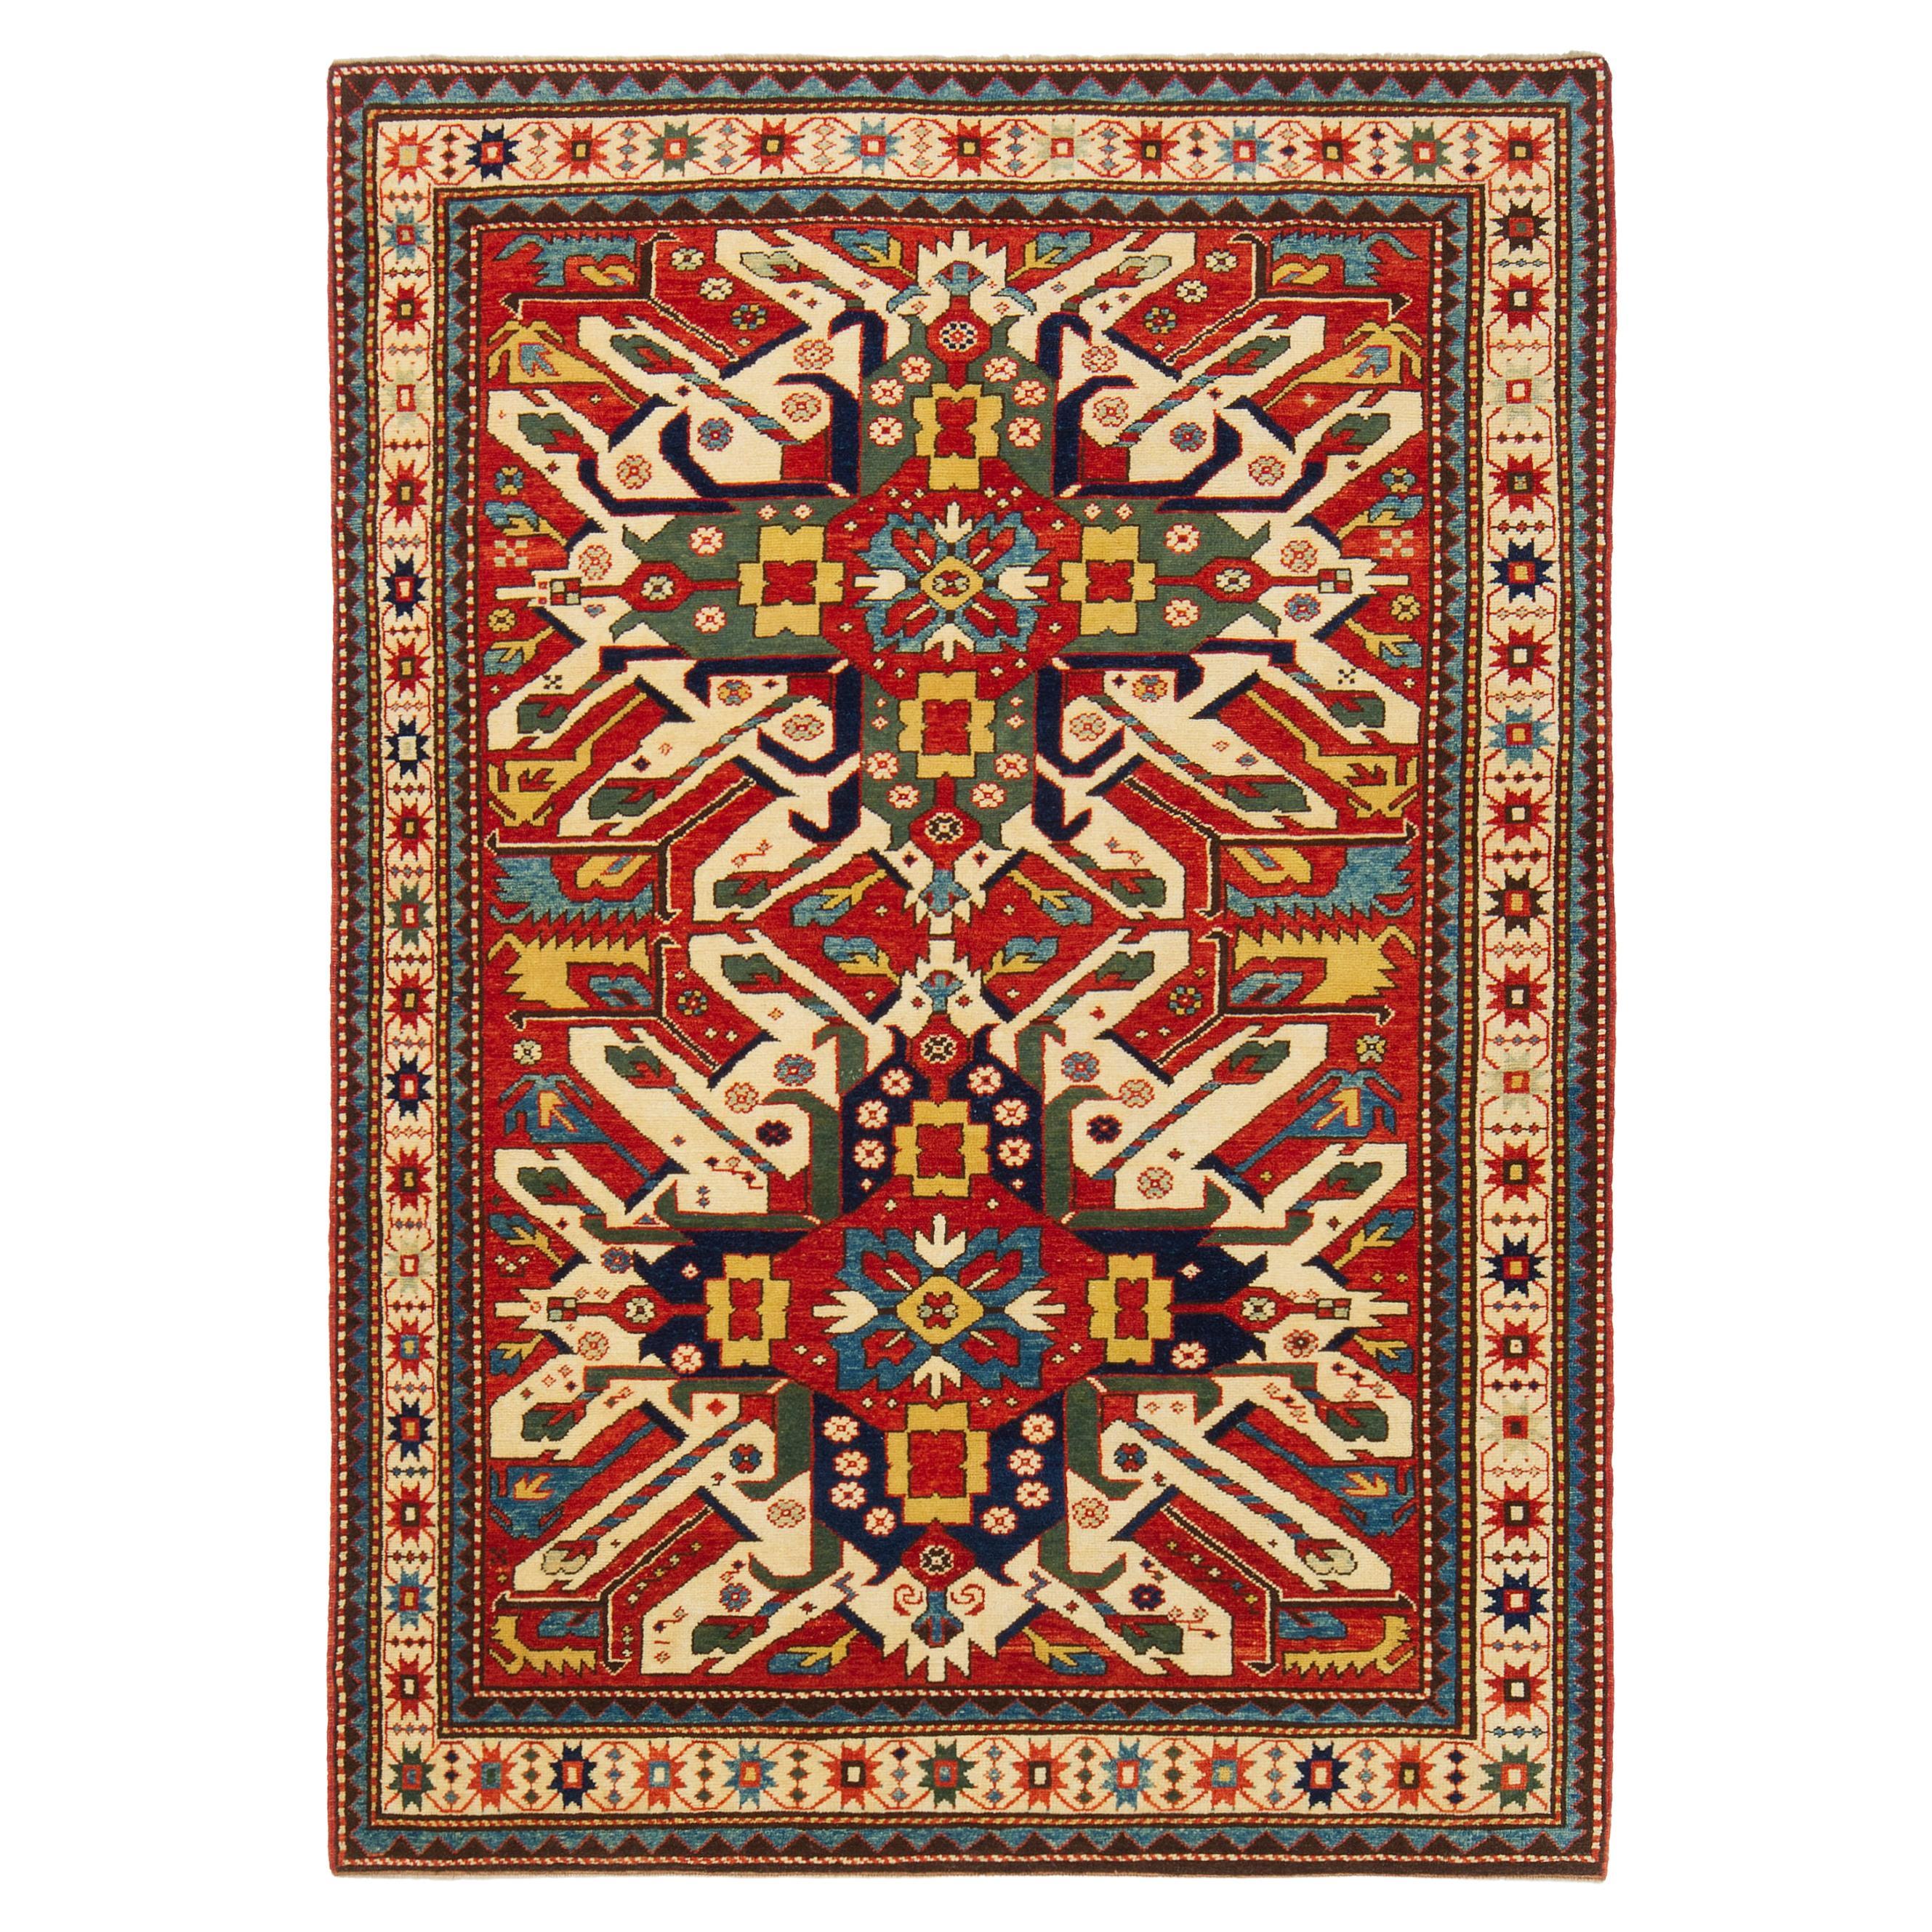 Ararat Rugs Chelaberd Karabakh Rug Antique Caucasian Revival Carpet Natural Dyed